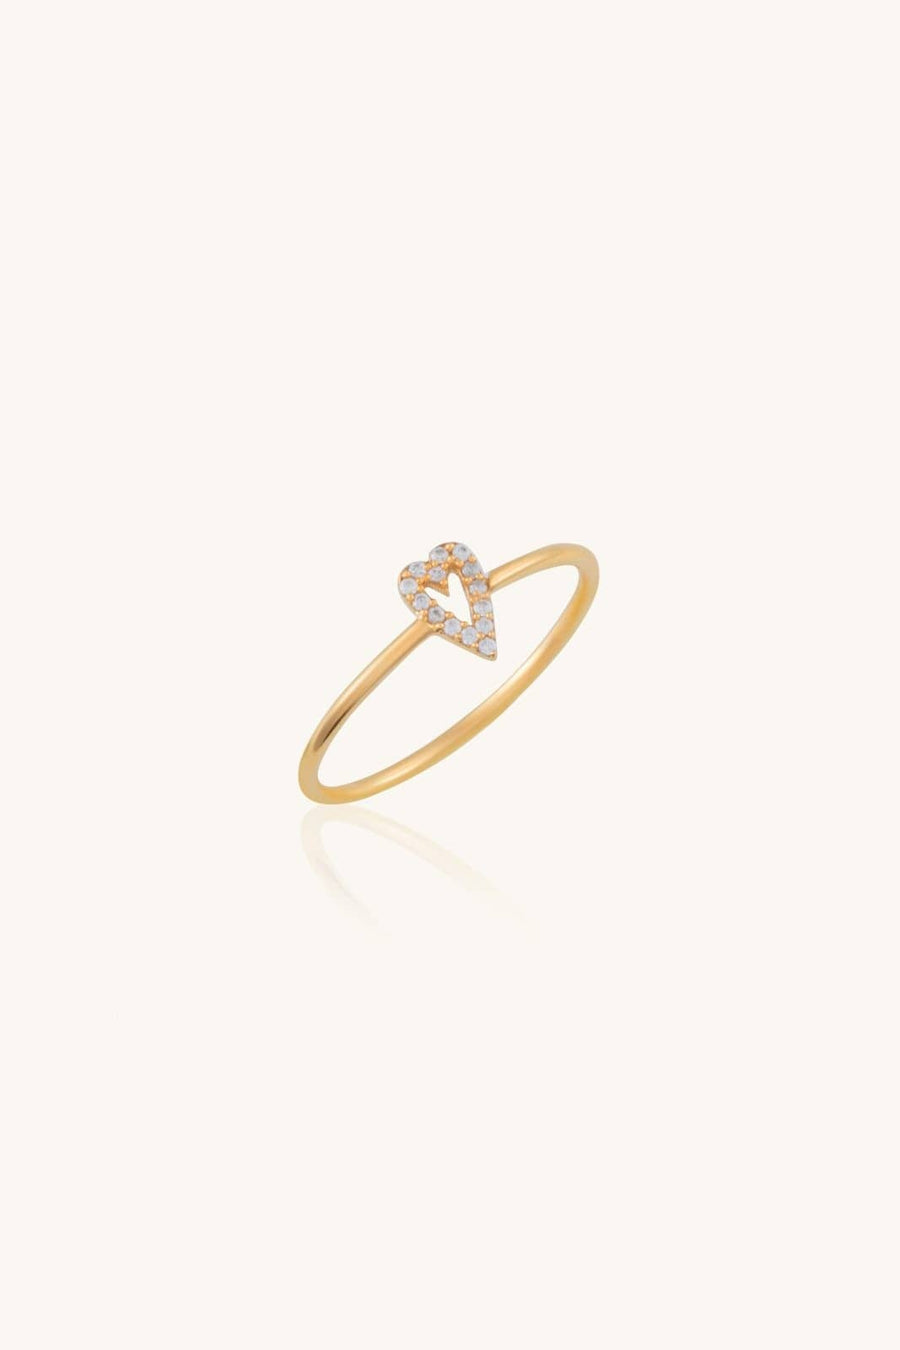 Heart-shaped diamond ring, Pave diamond jewelry, Sterling silver engagement ring, Women's fashion statement